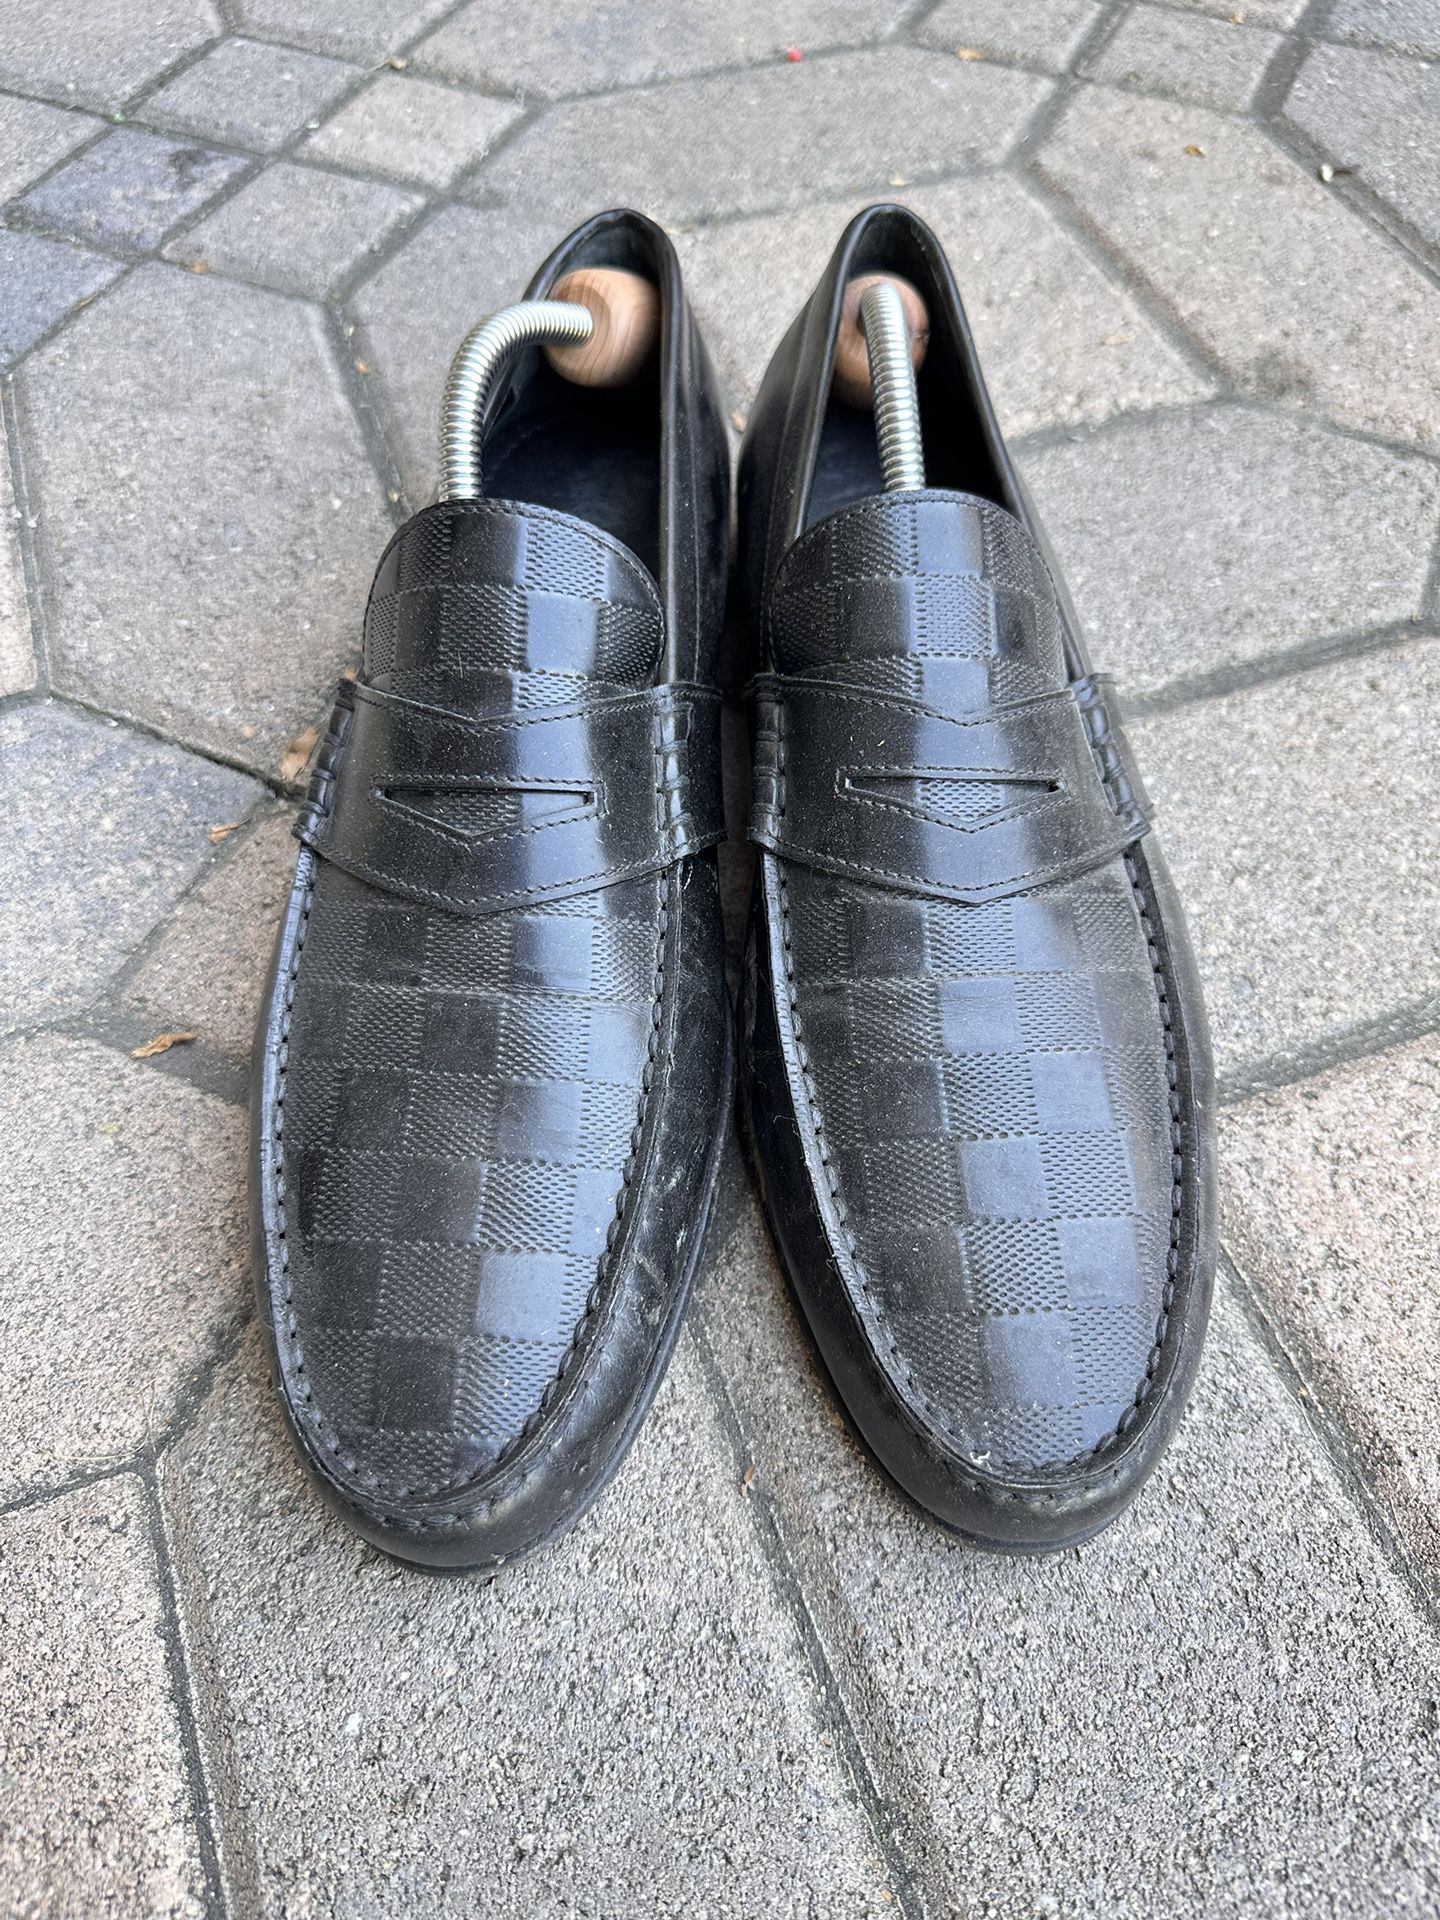 Louis Vuitton Man Shoe Size 81/2 for Sale in Temple City, CA - OfferUp